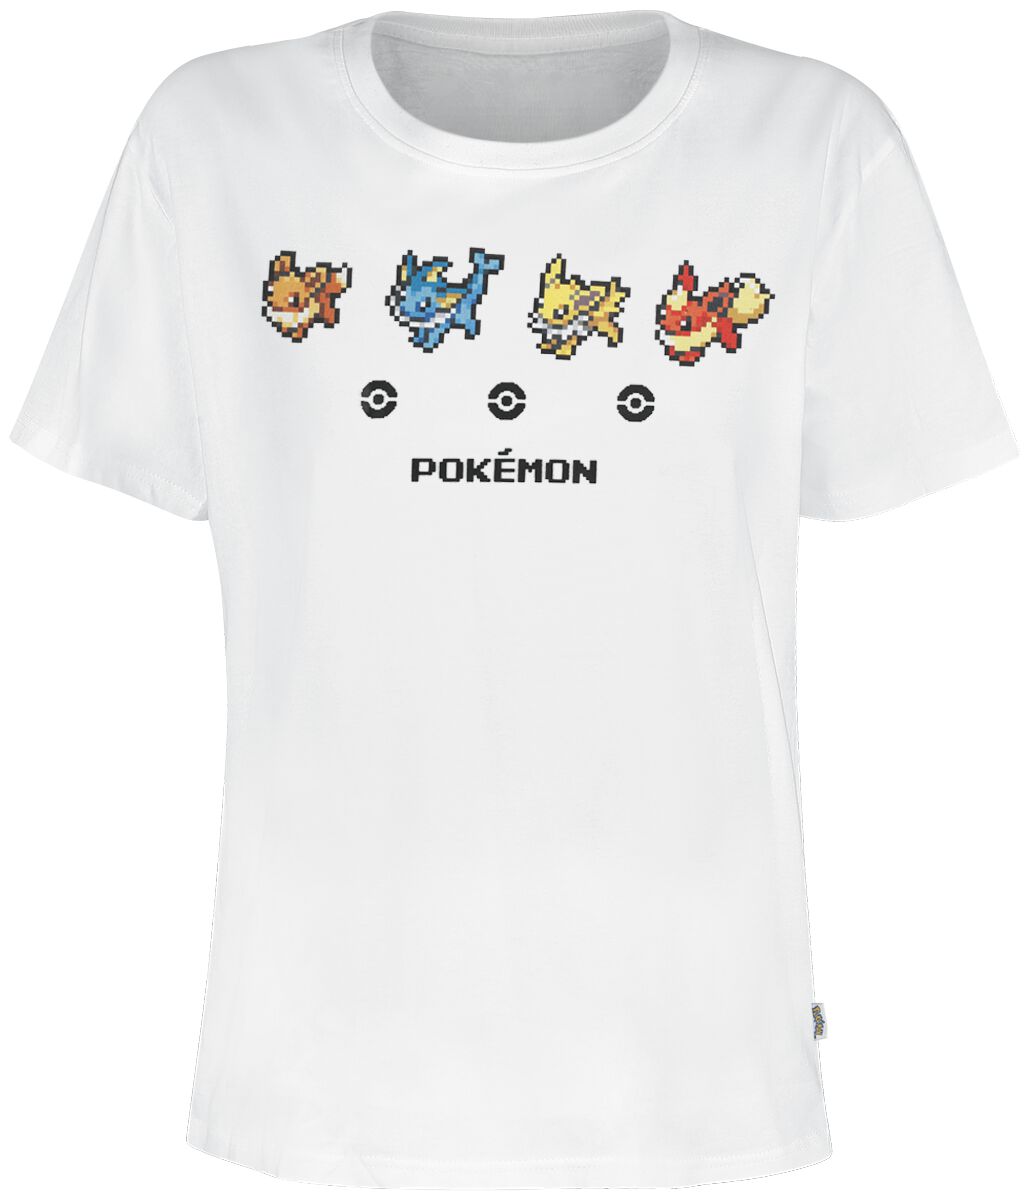 Pokémon Eeveelutions T-Shirt white